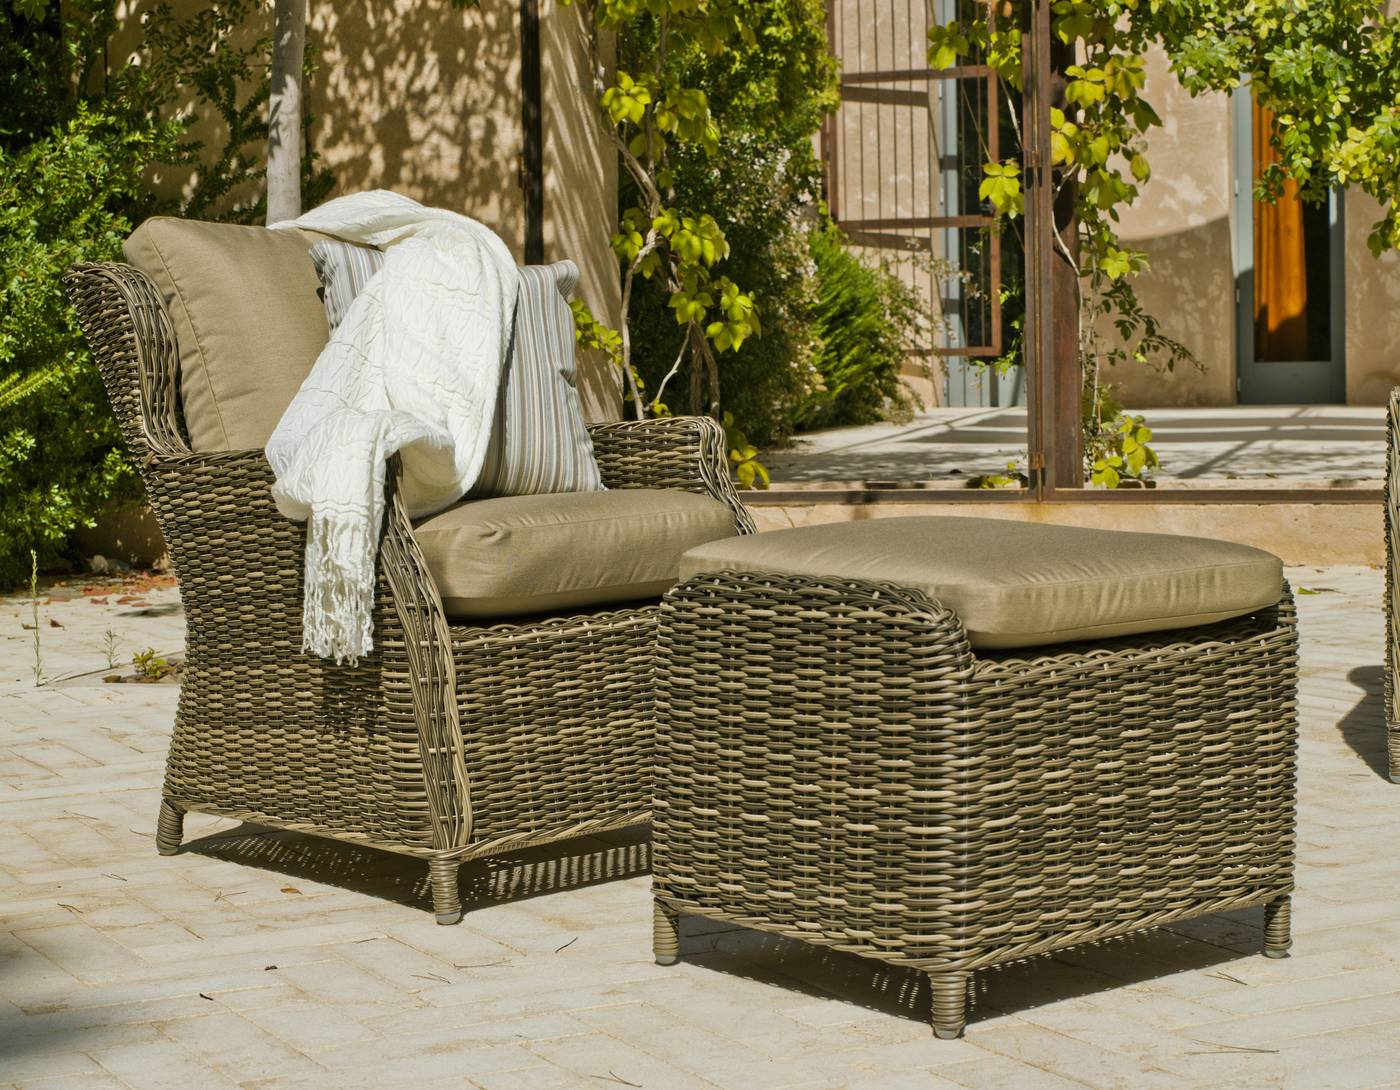 Set Ratán Borsalino-47 - Set médula sintética calidad superior: sofá 2 plazas, 2 sillones y 1 mesa de centro